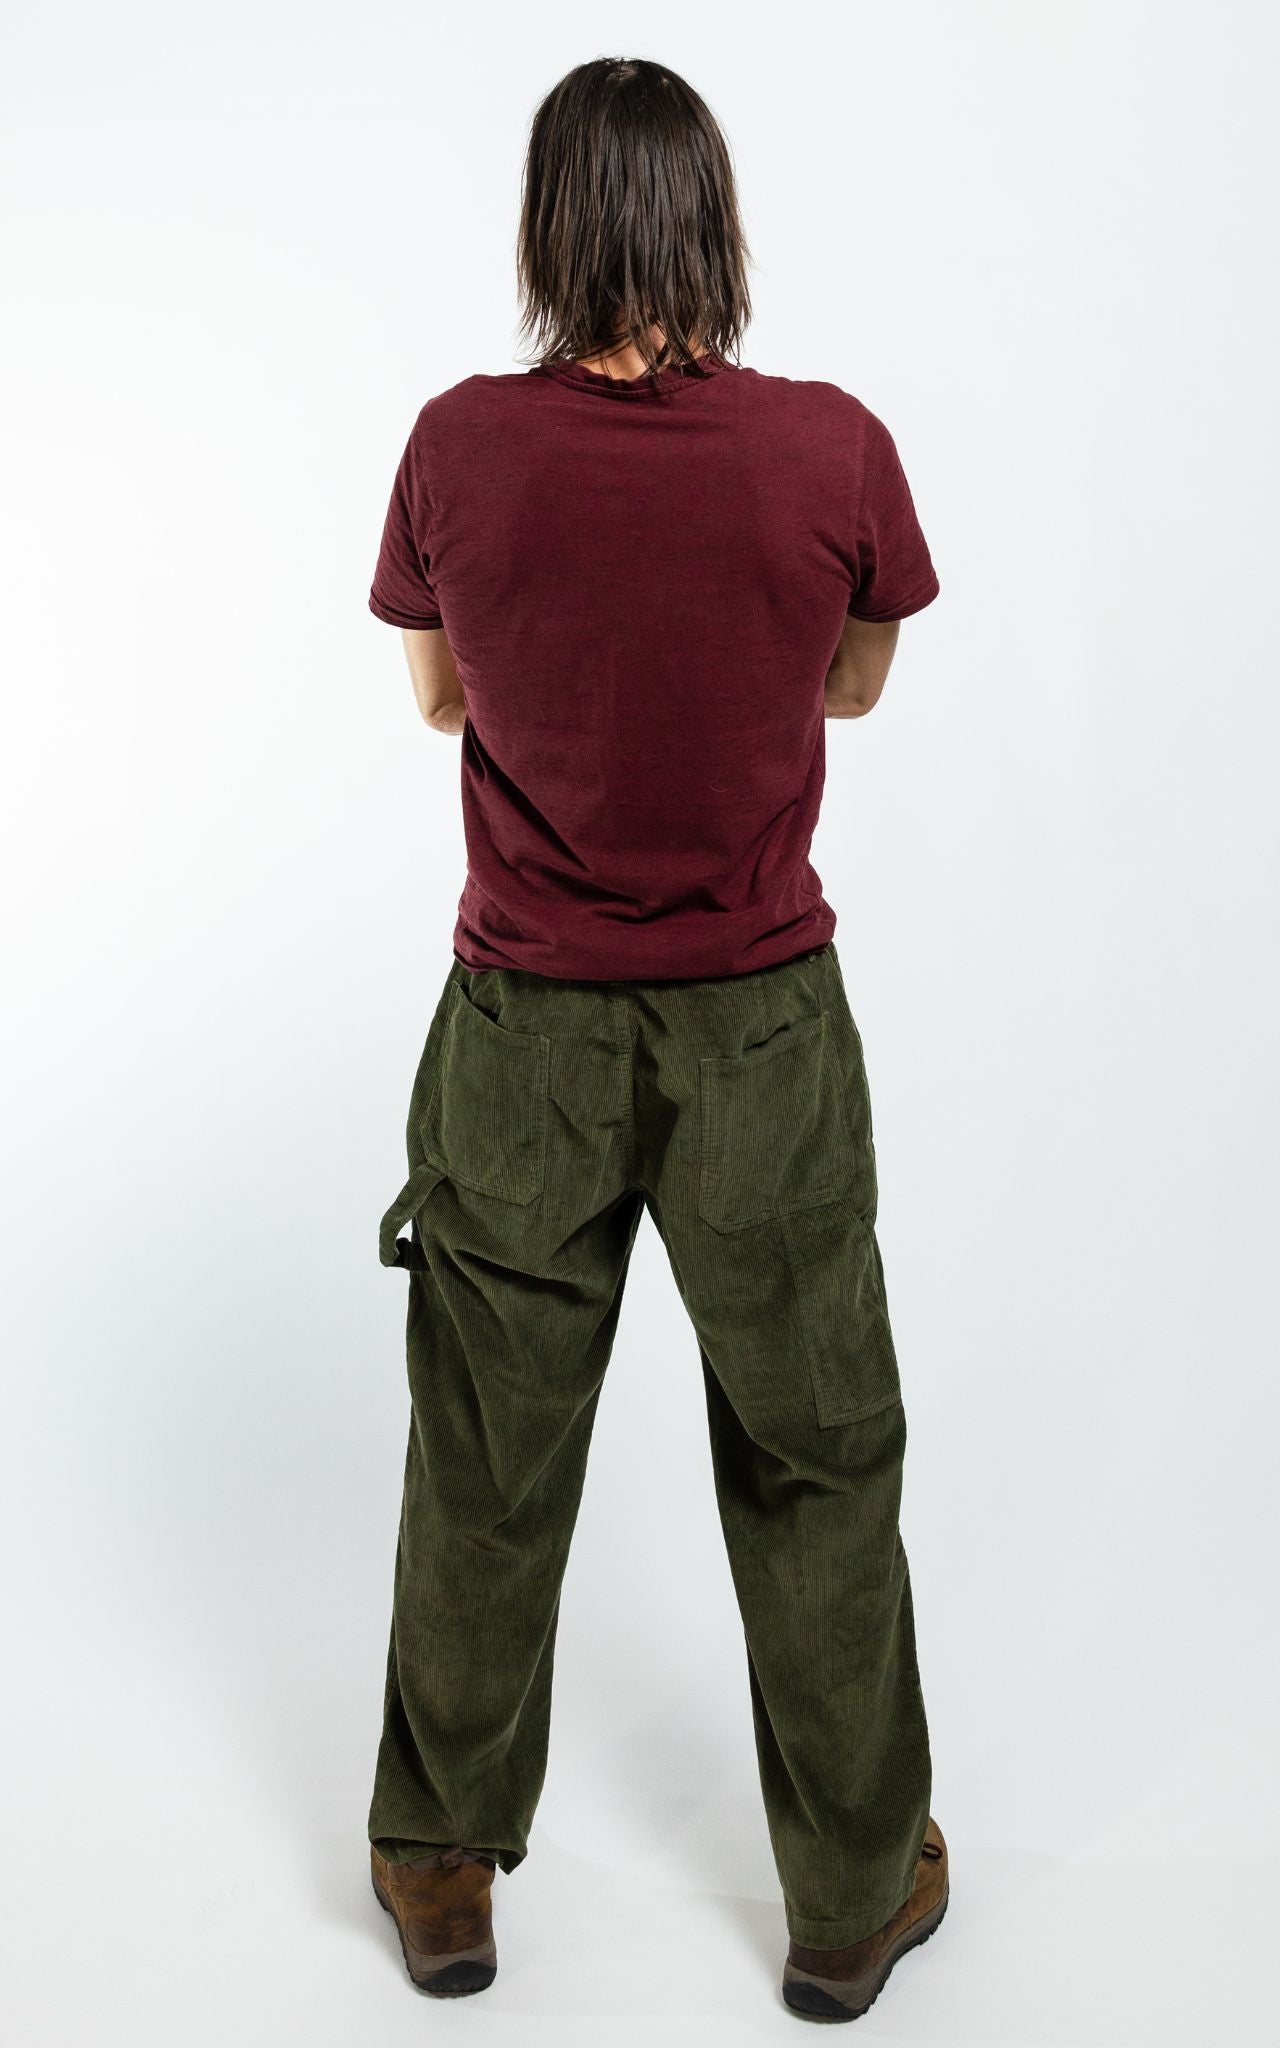 Surya Corduroy Trousers for Men made in Nepal - khaki